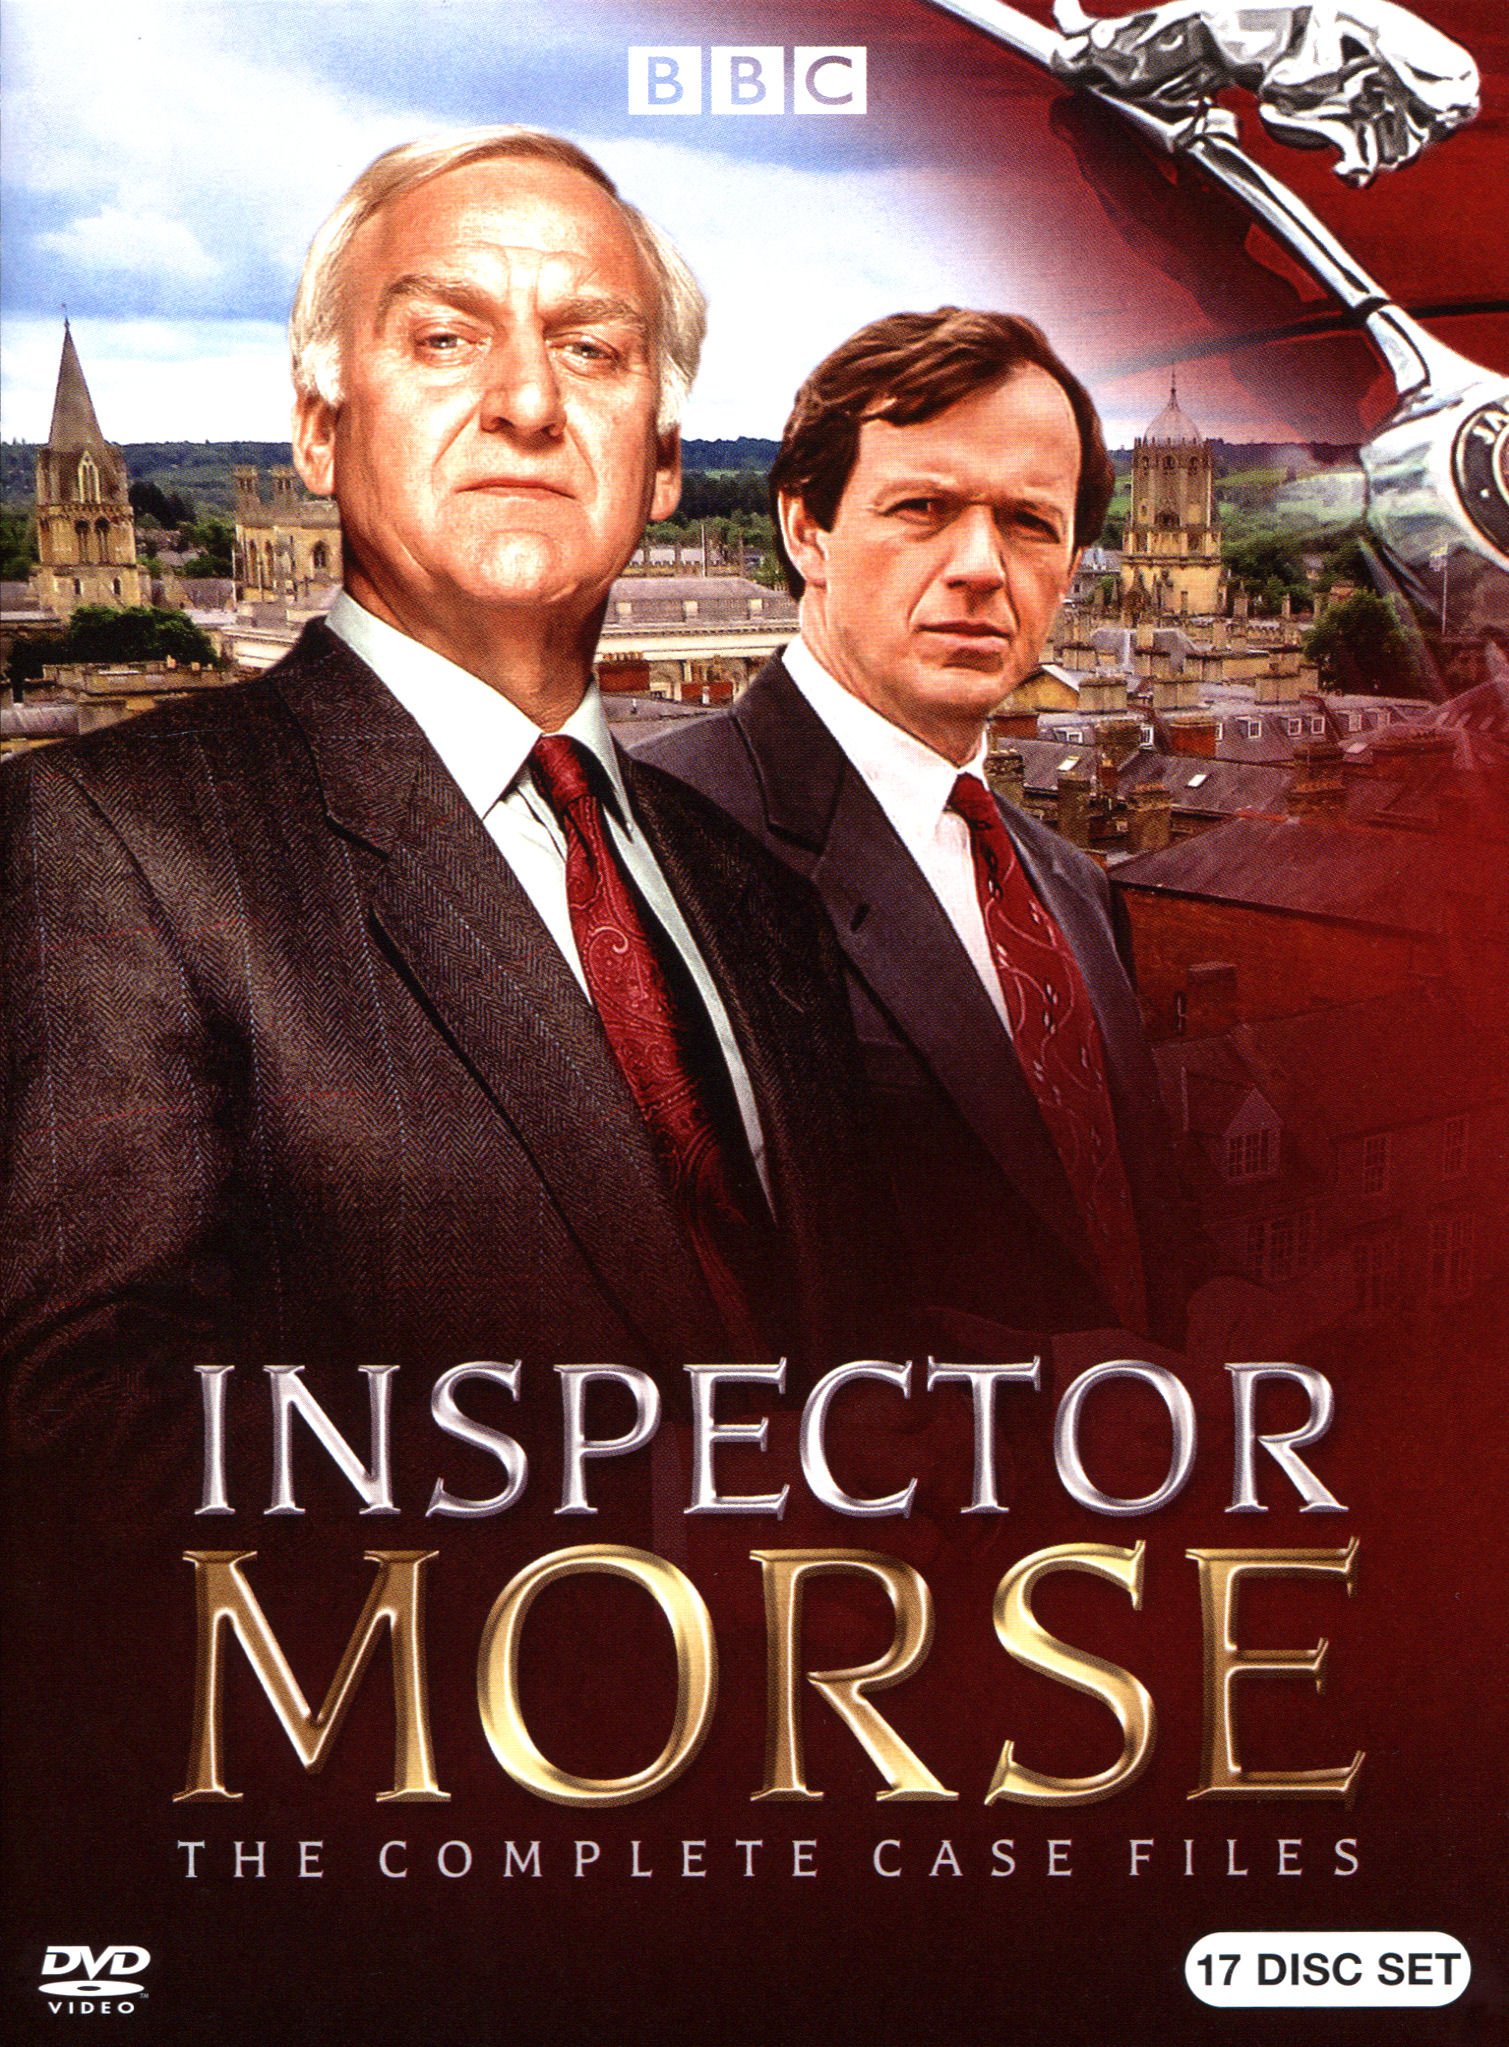 Inspector Morse DvD 14